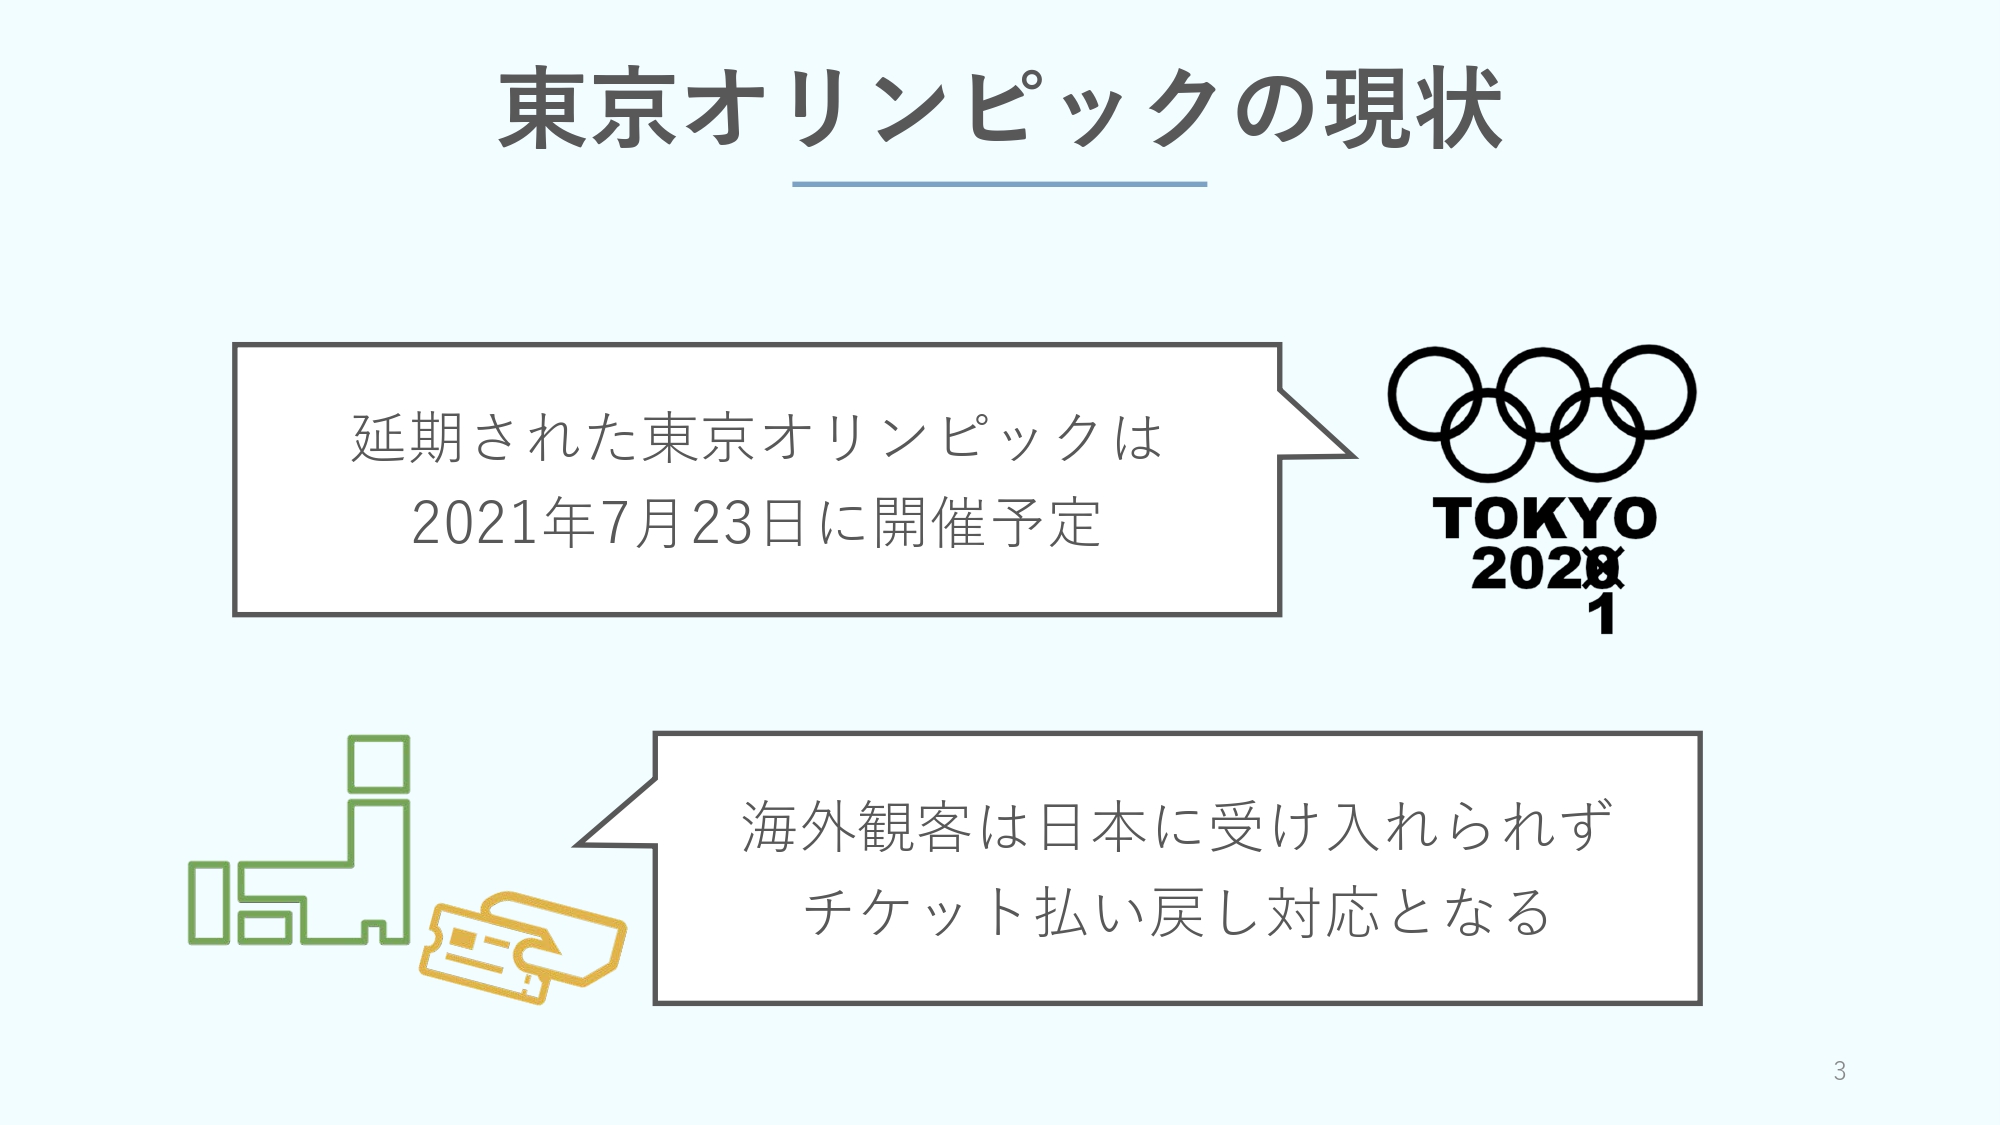 tokyo2020 分割_page-0003